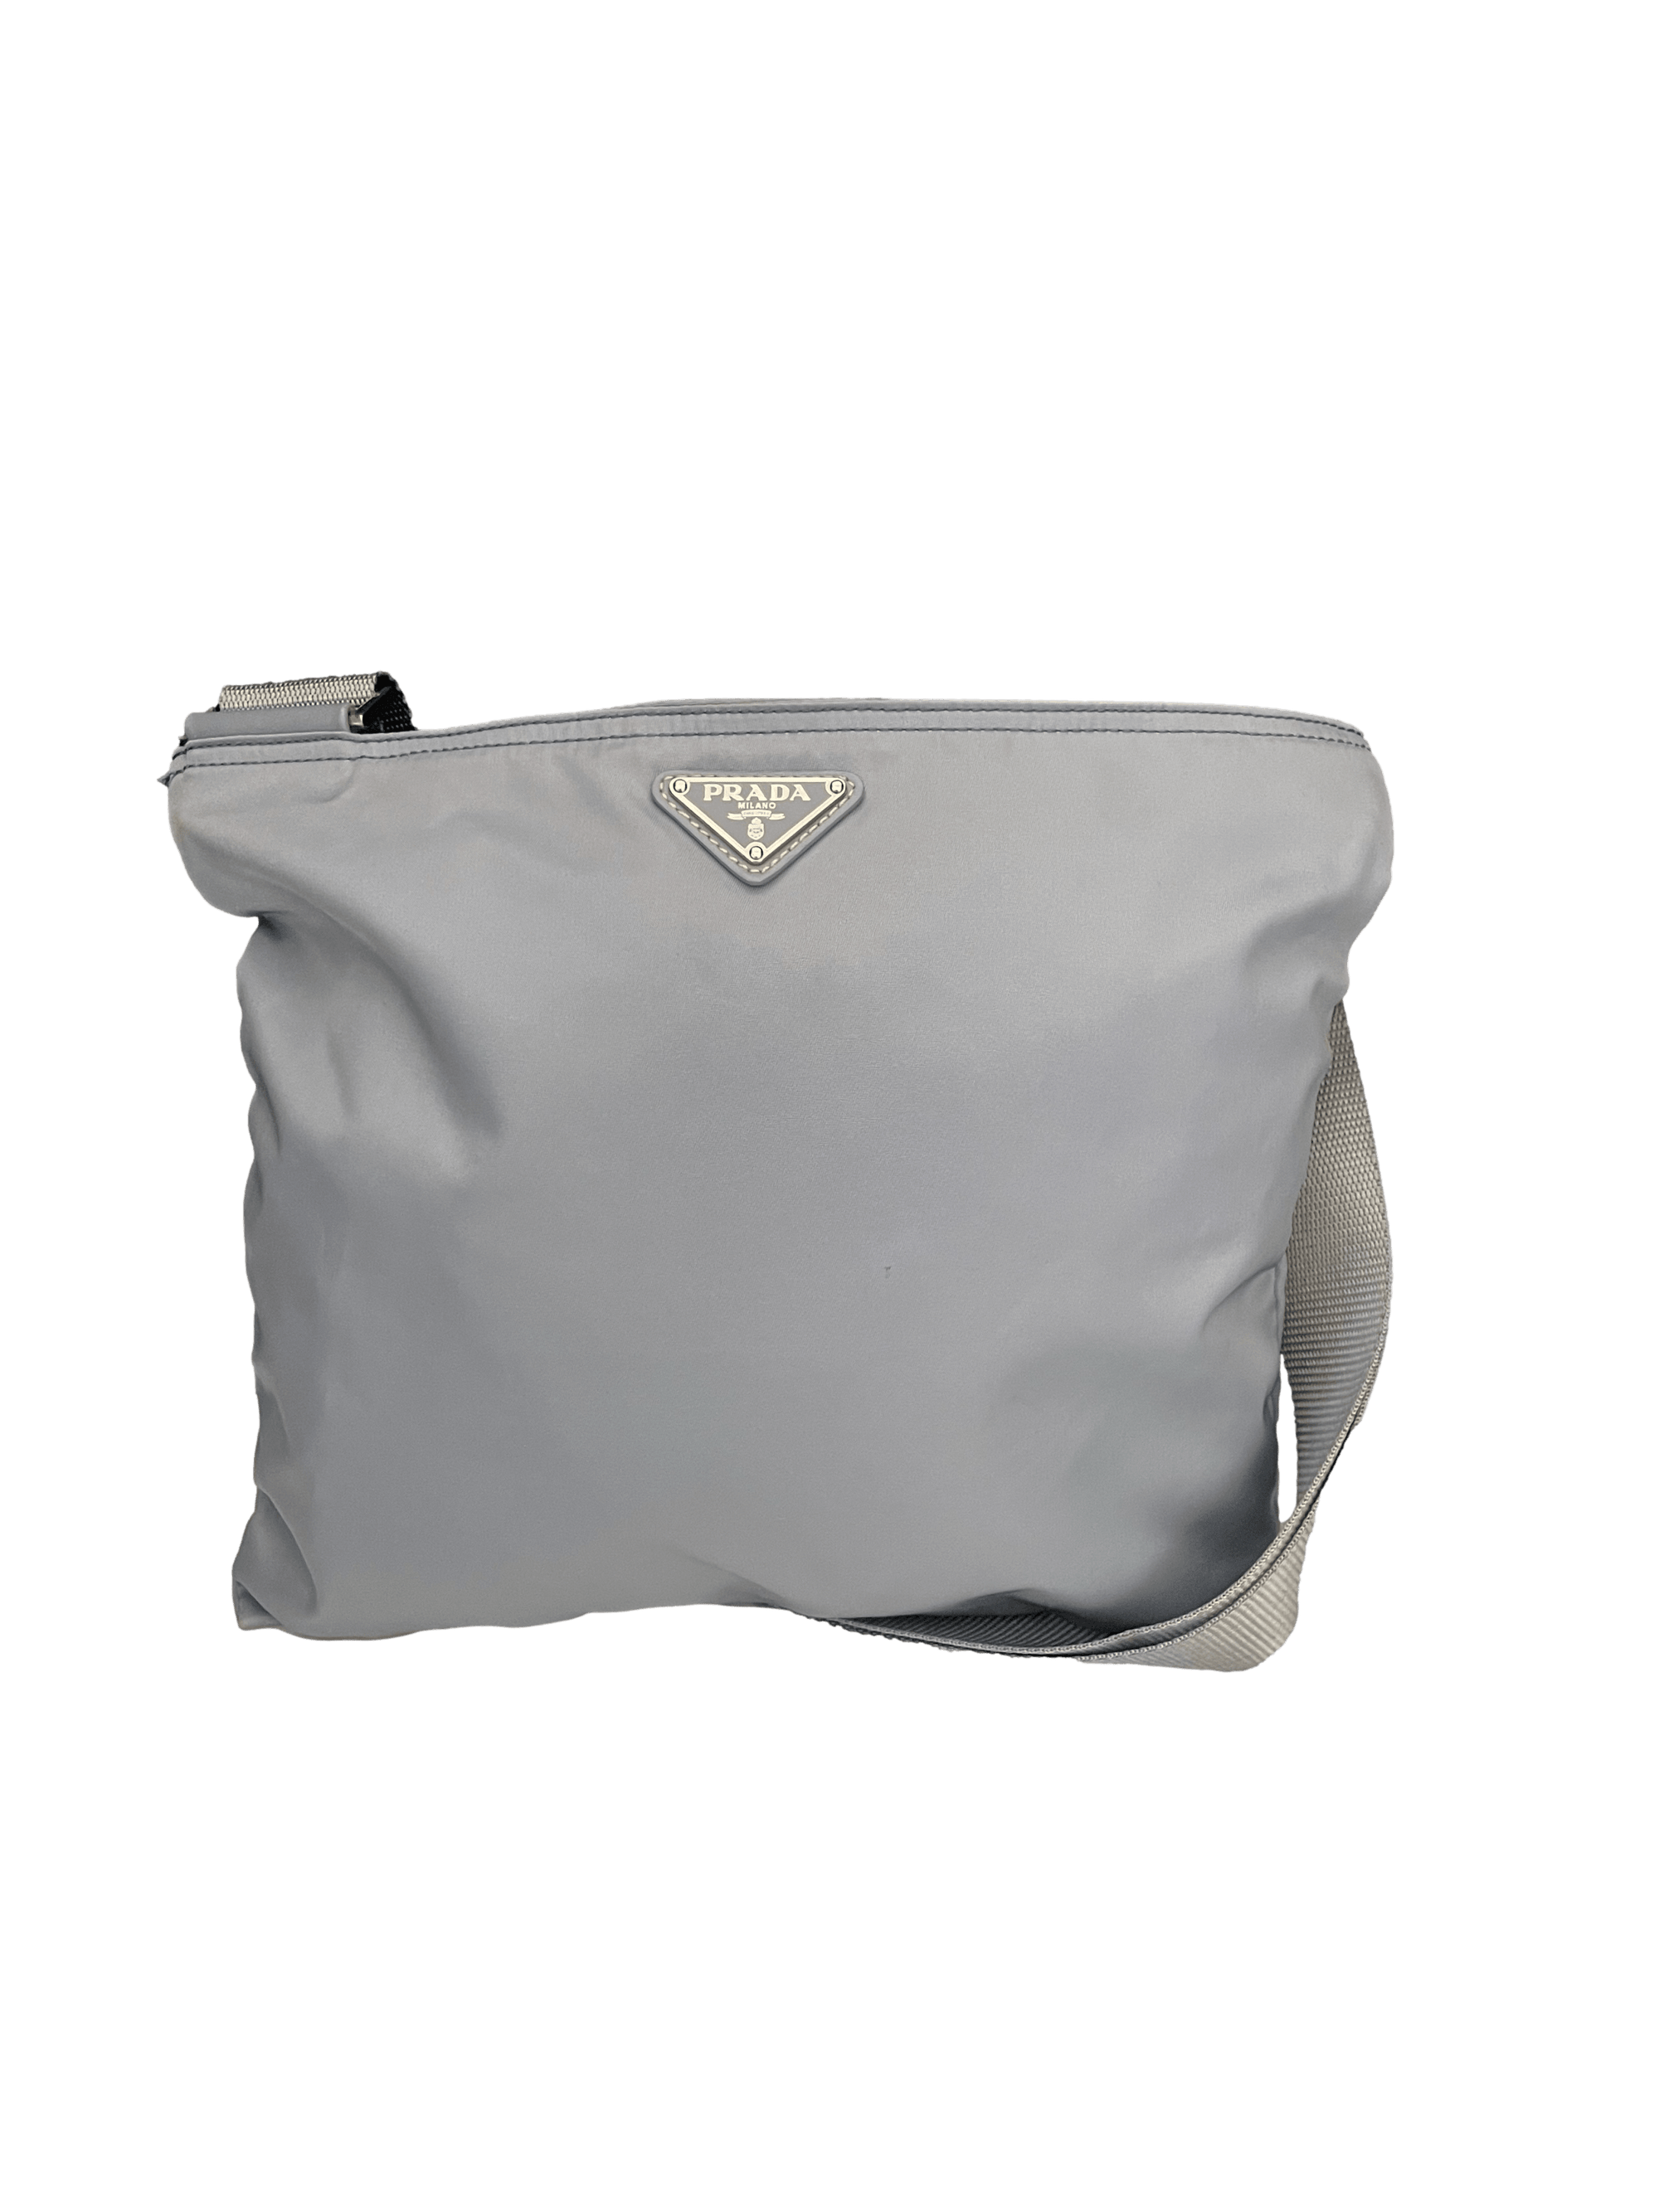 Prada Baby Blue Nylon Crossbody Bag - Handbags